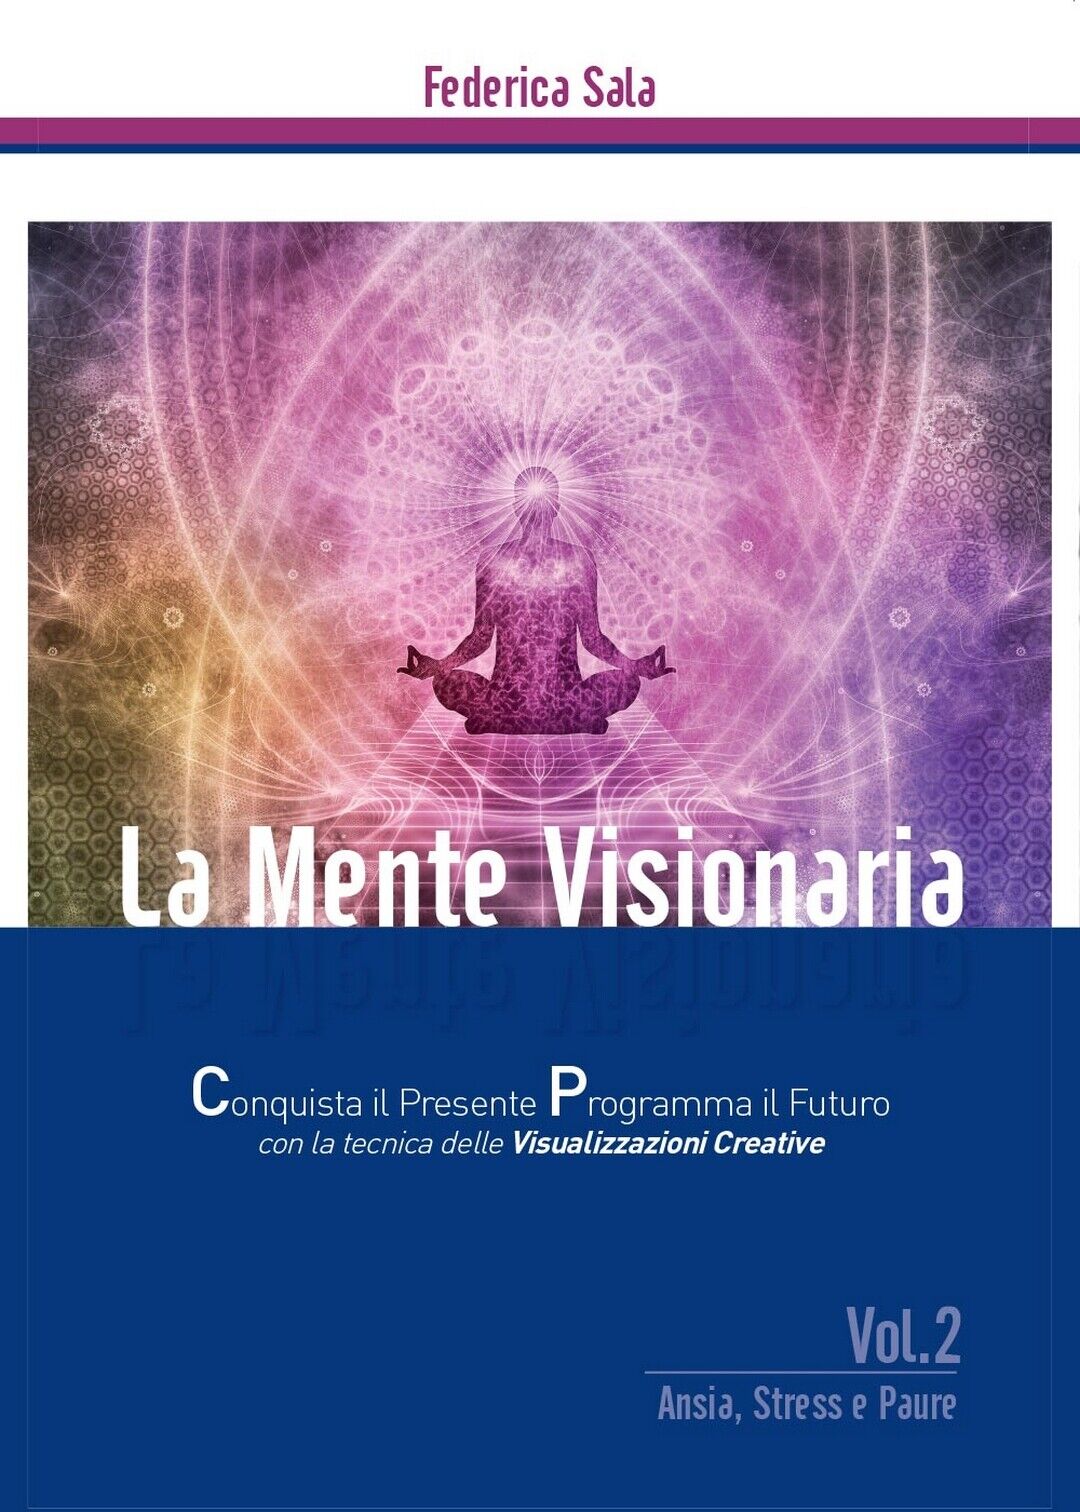 La Mente Visionaria Vol.2 Ansia, Stress & Paure  di Federica Sala,  2016